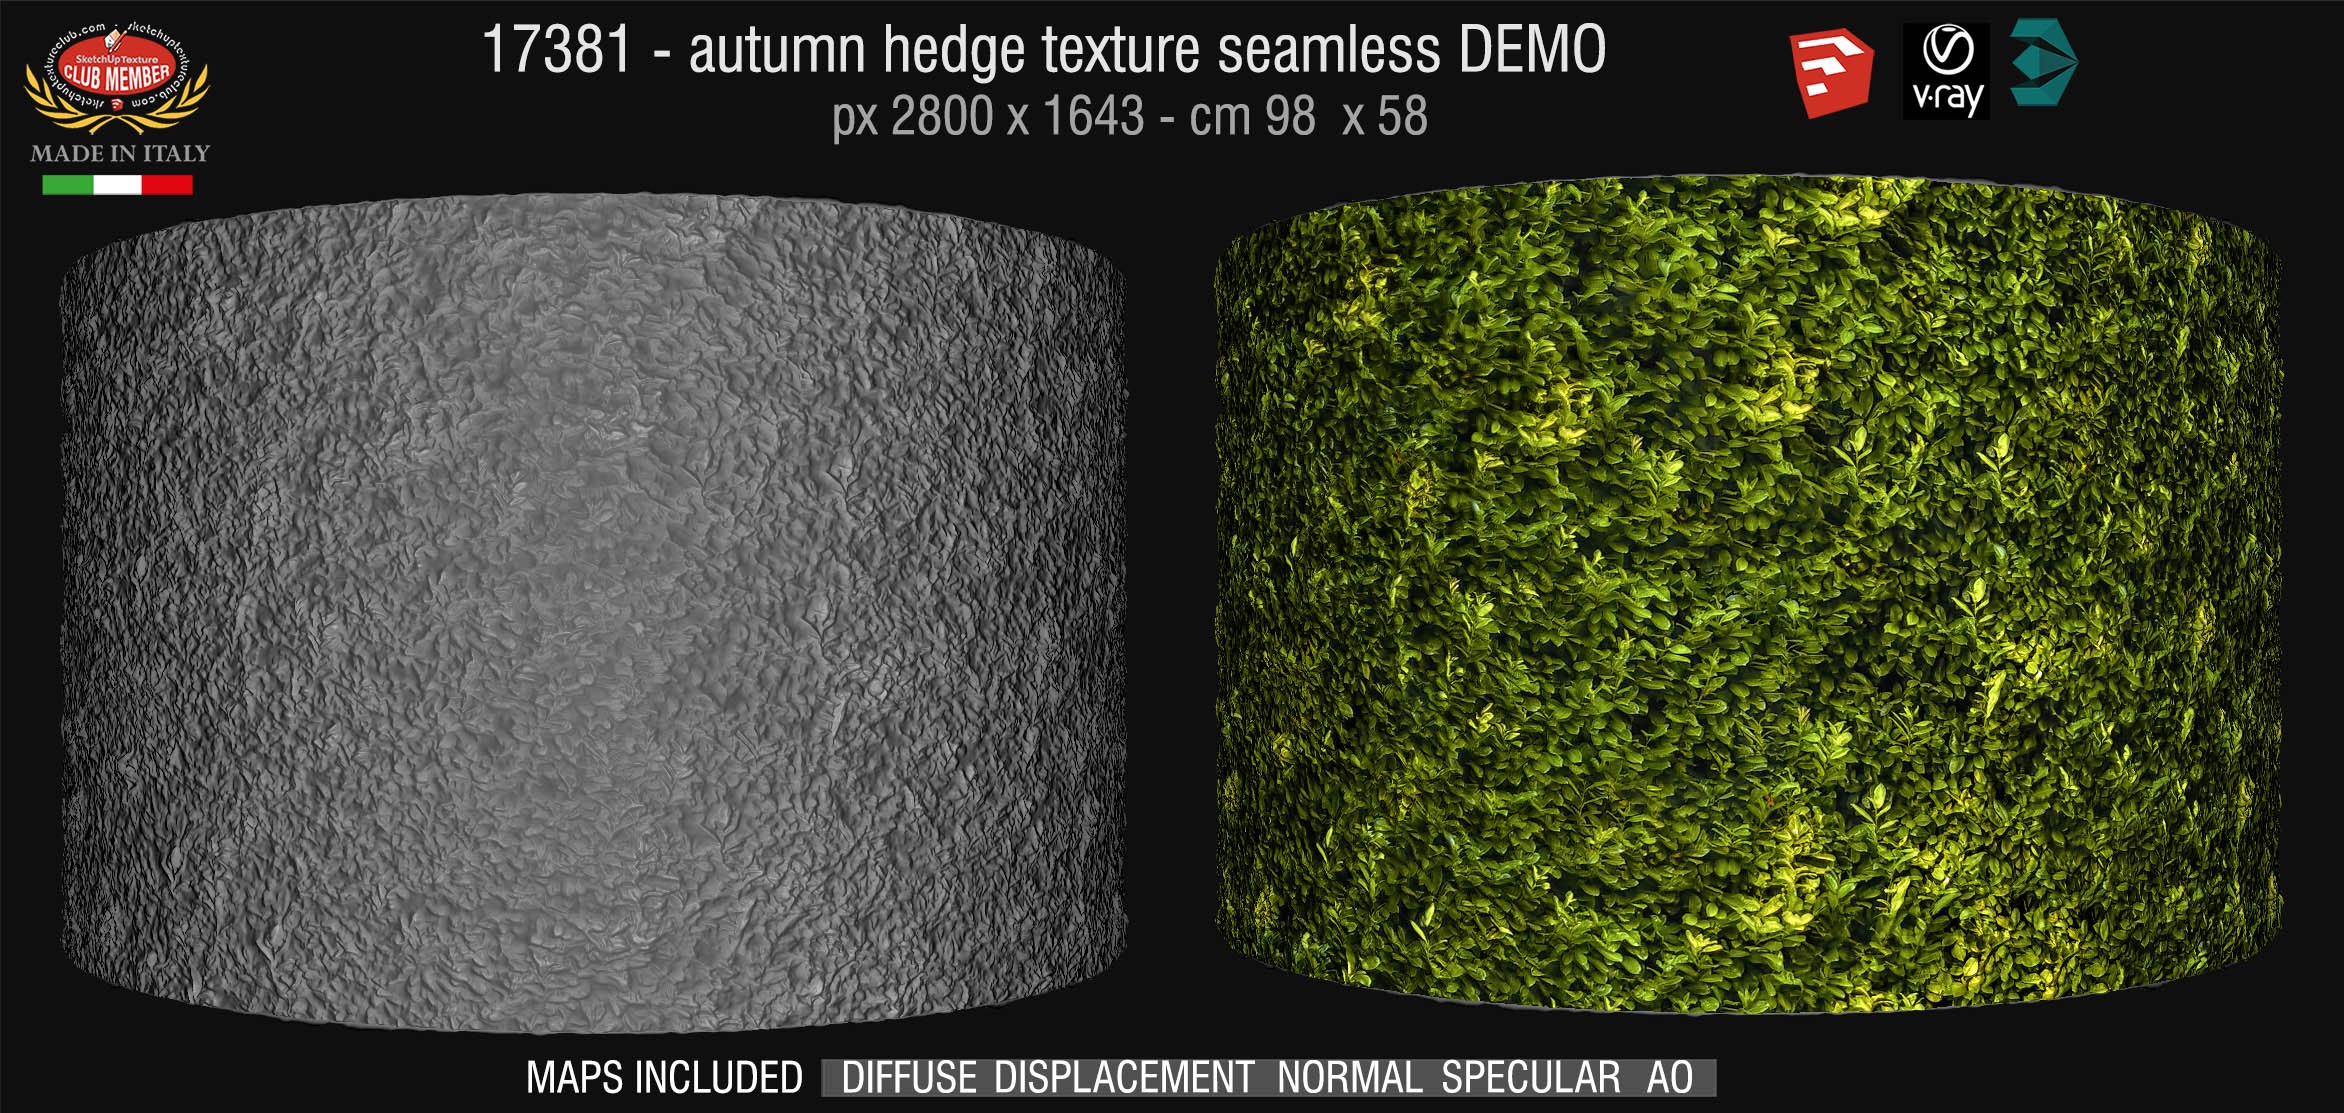 17381 HR autumn hedge texture + maps DEMO